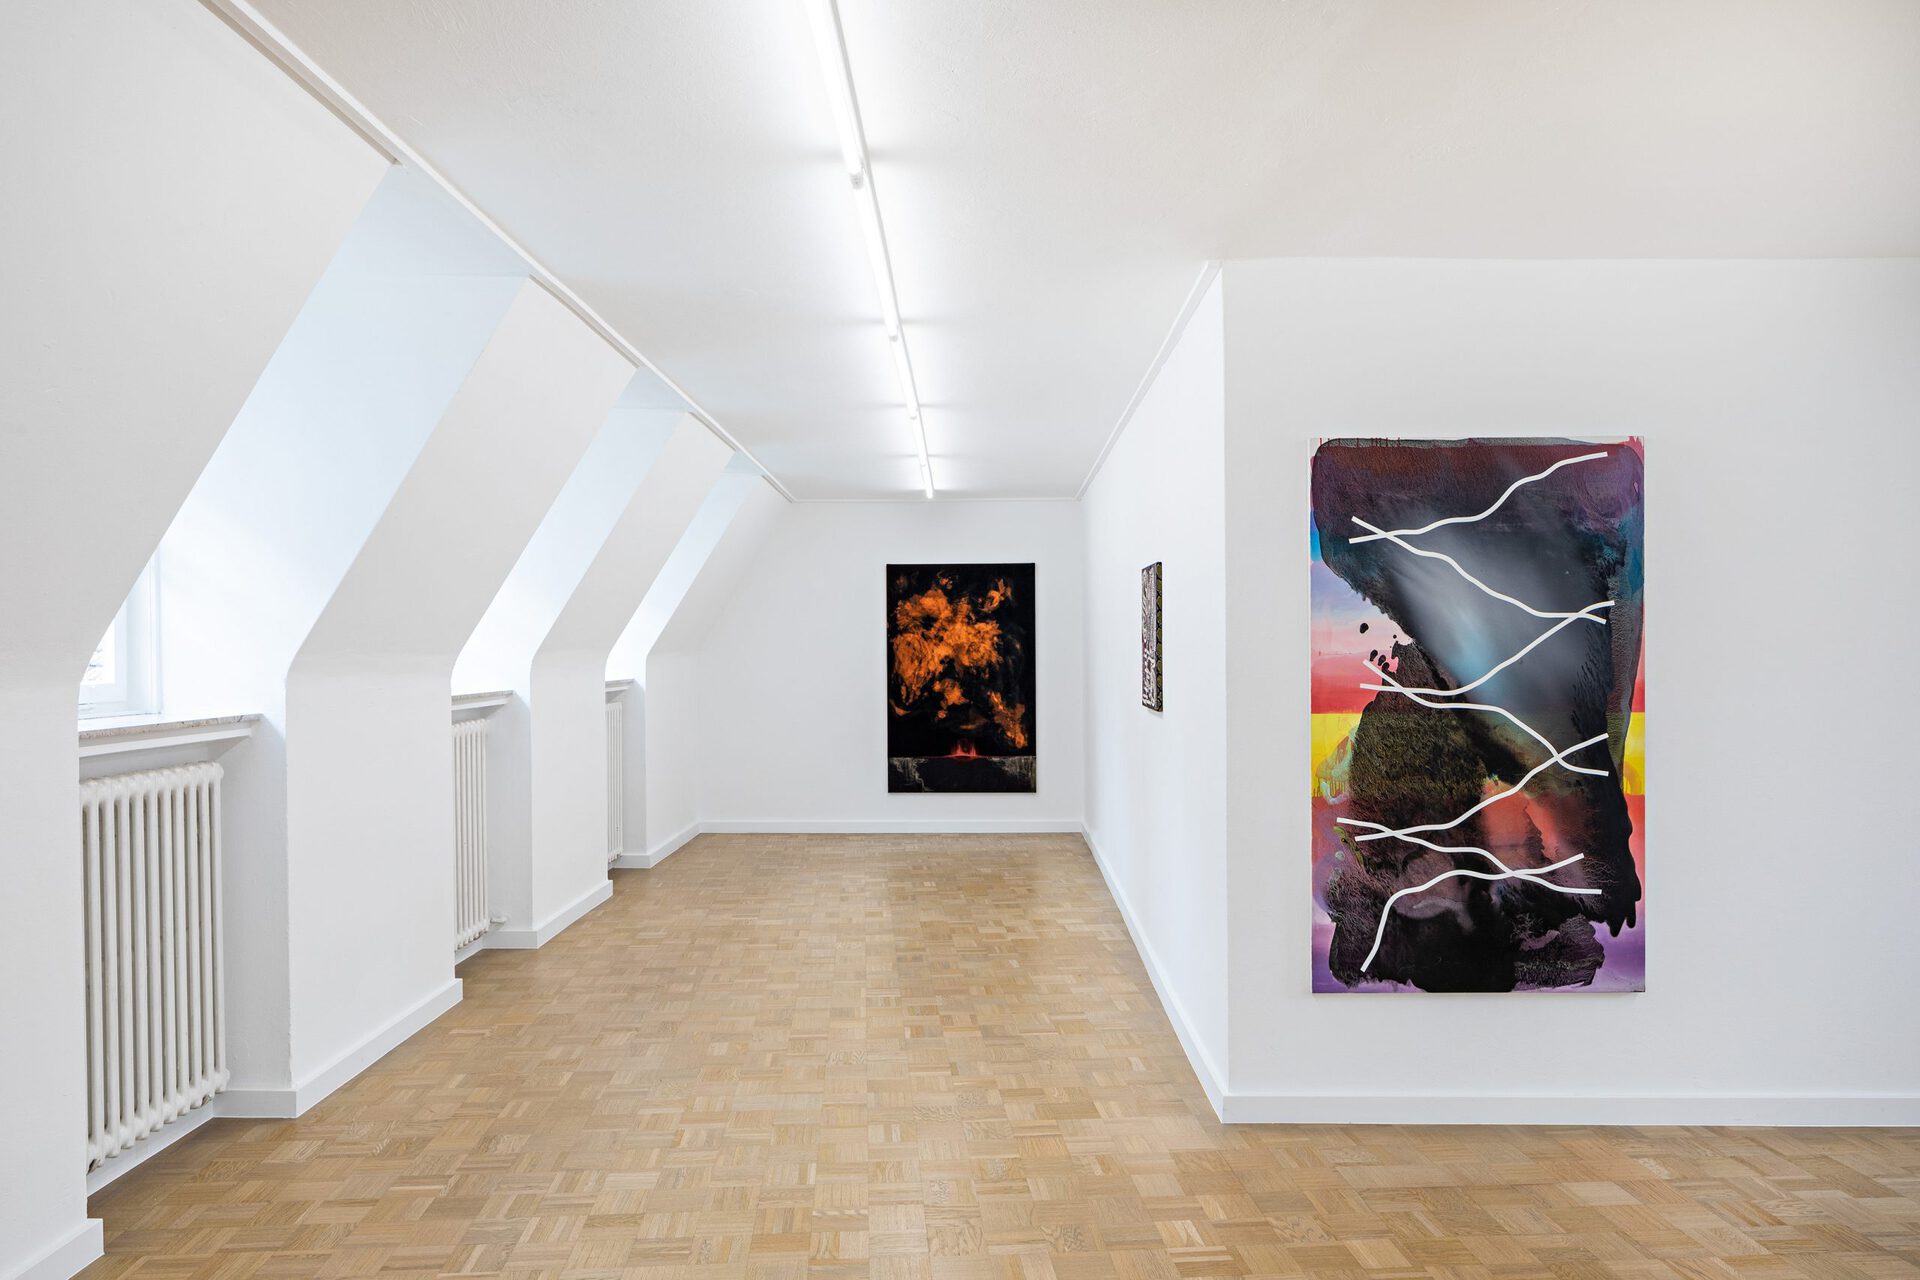 Leda Bourgogne Obsidian Mouth, 2019   Samuel Richardot Alias, 2018   Ausstellungsansicht / Exhibition view  THE IMMANENT HORIZON Kunstverein Bielefeld, 2020  Photo: Fred Dott